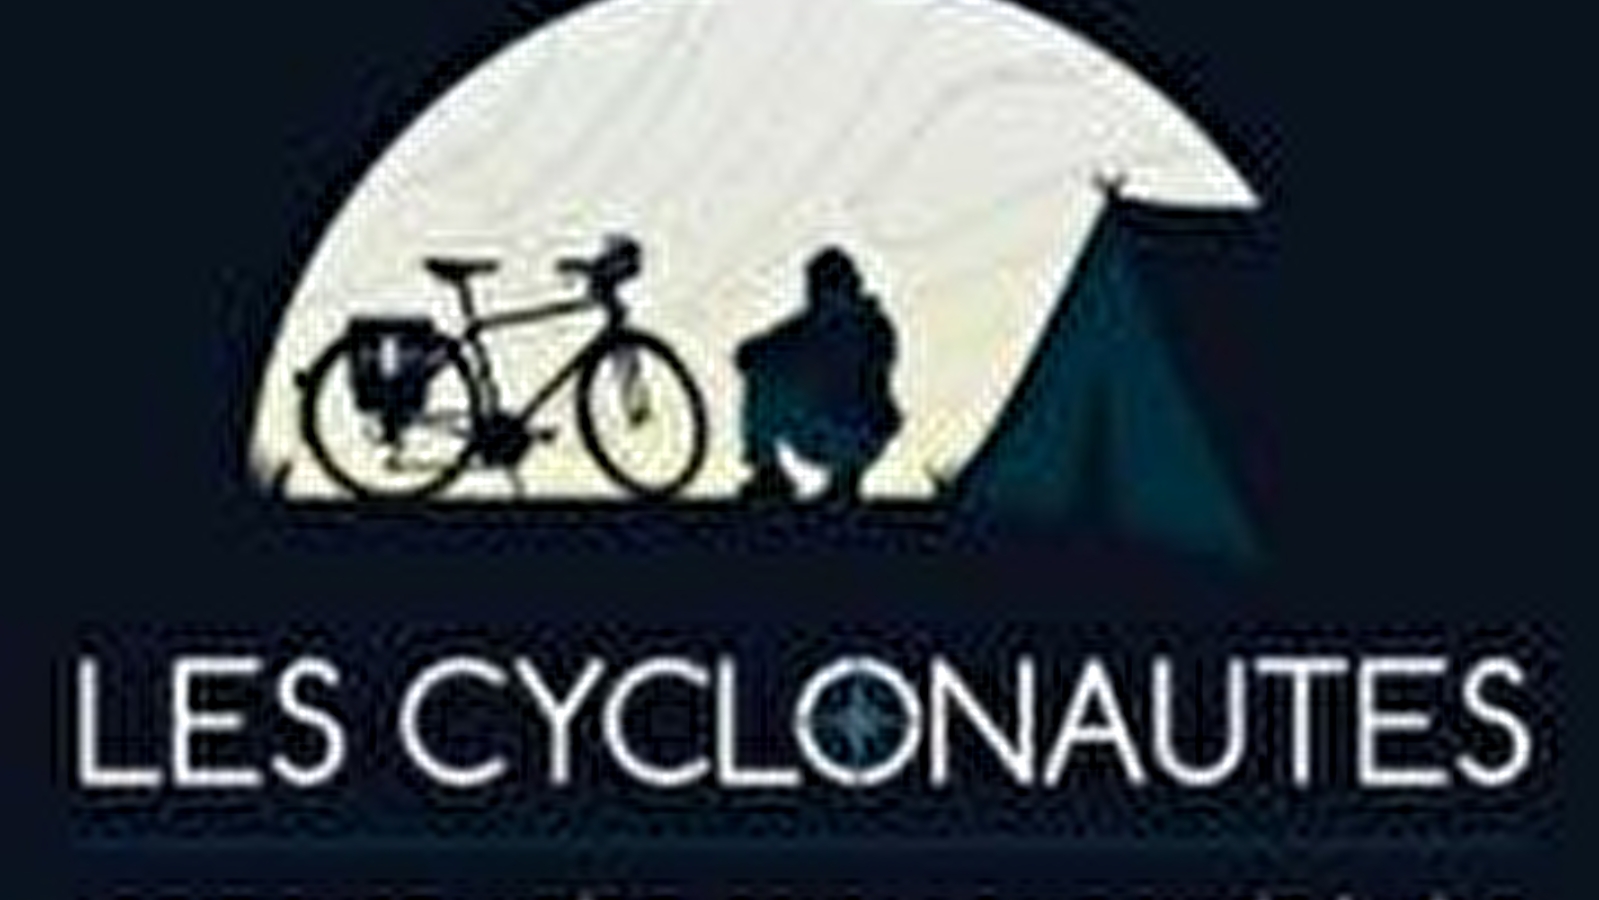 Les Cyclonautes